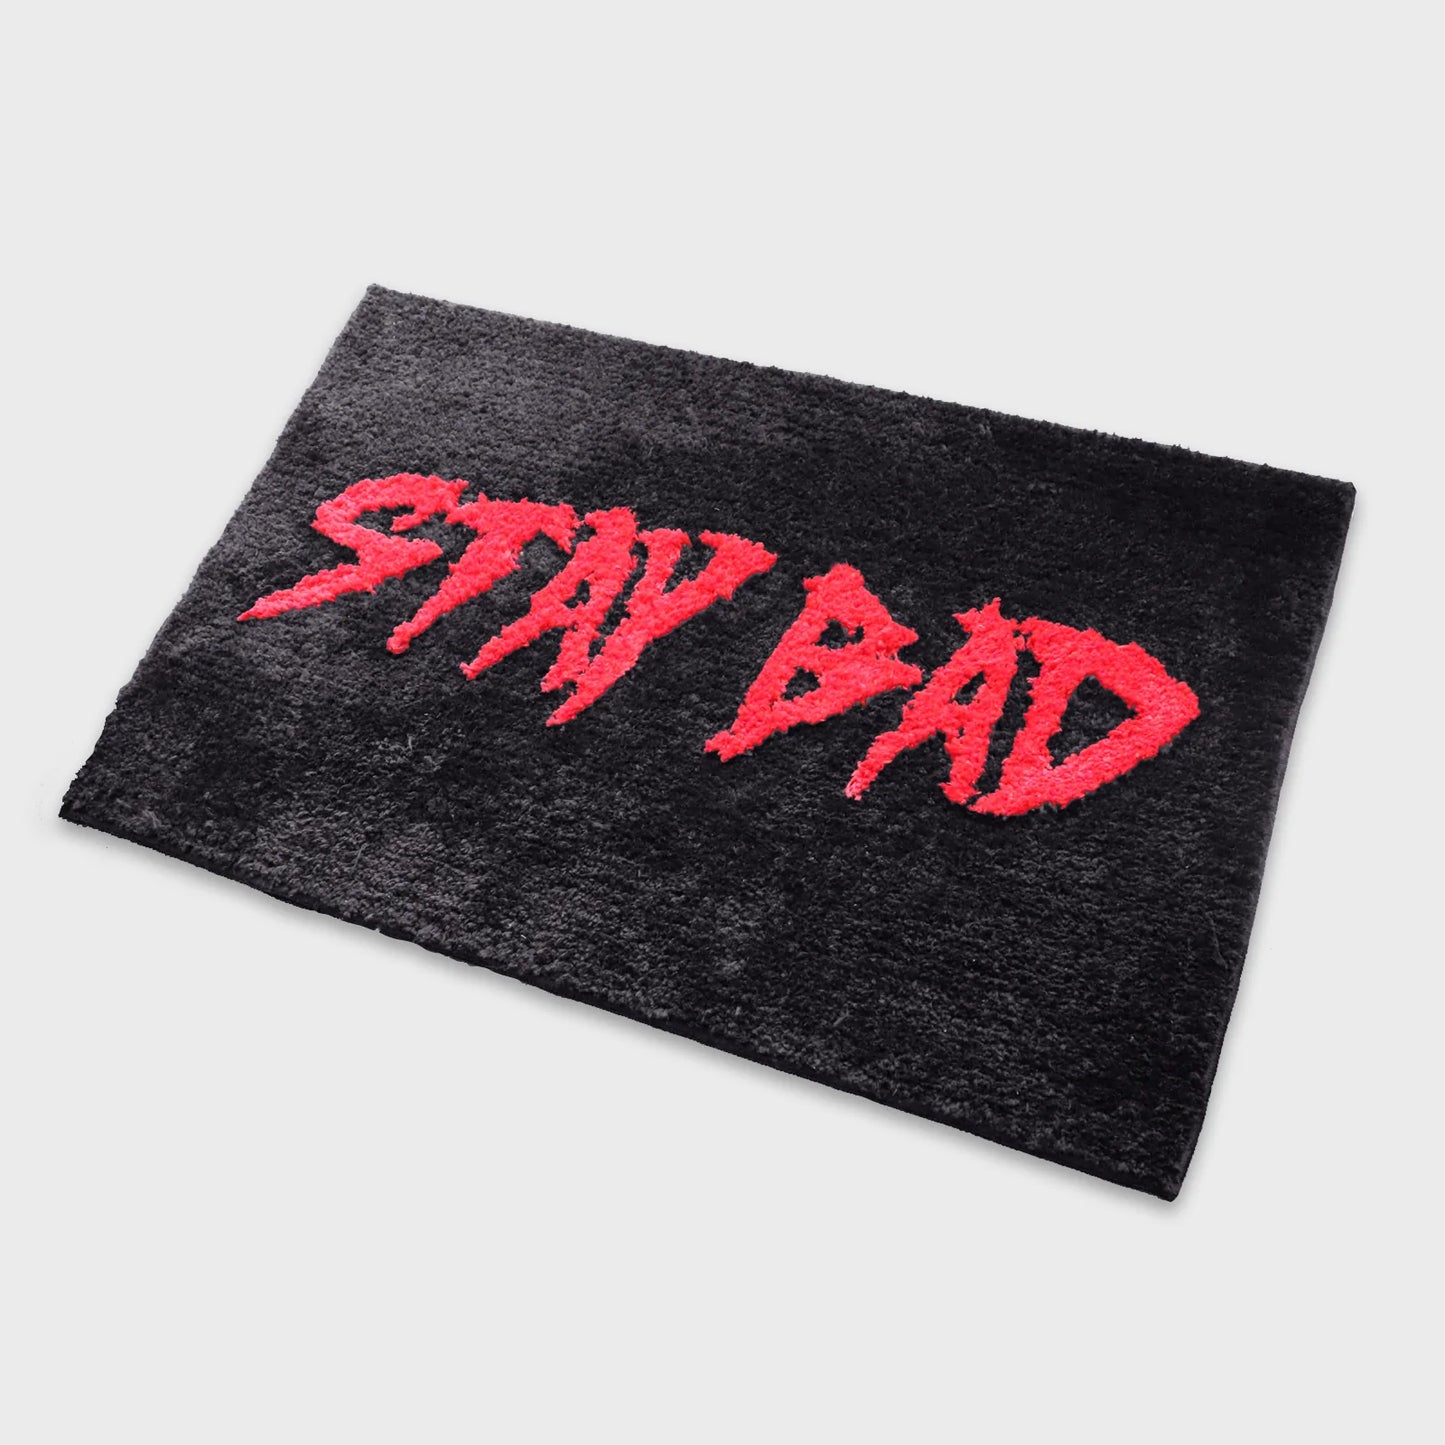 Stay Bad Floor Mat